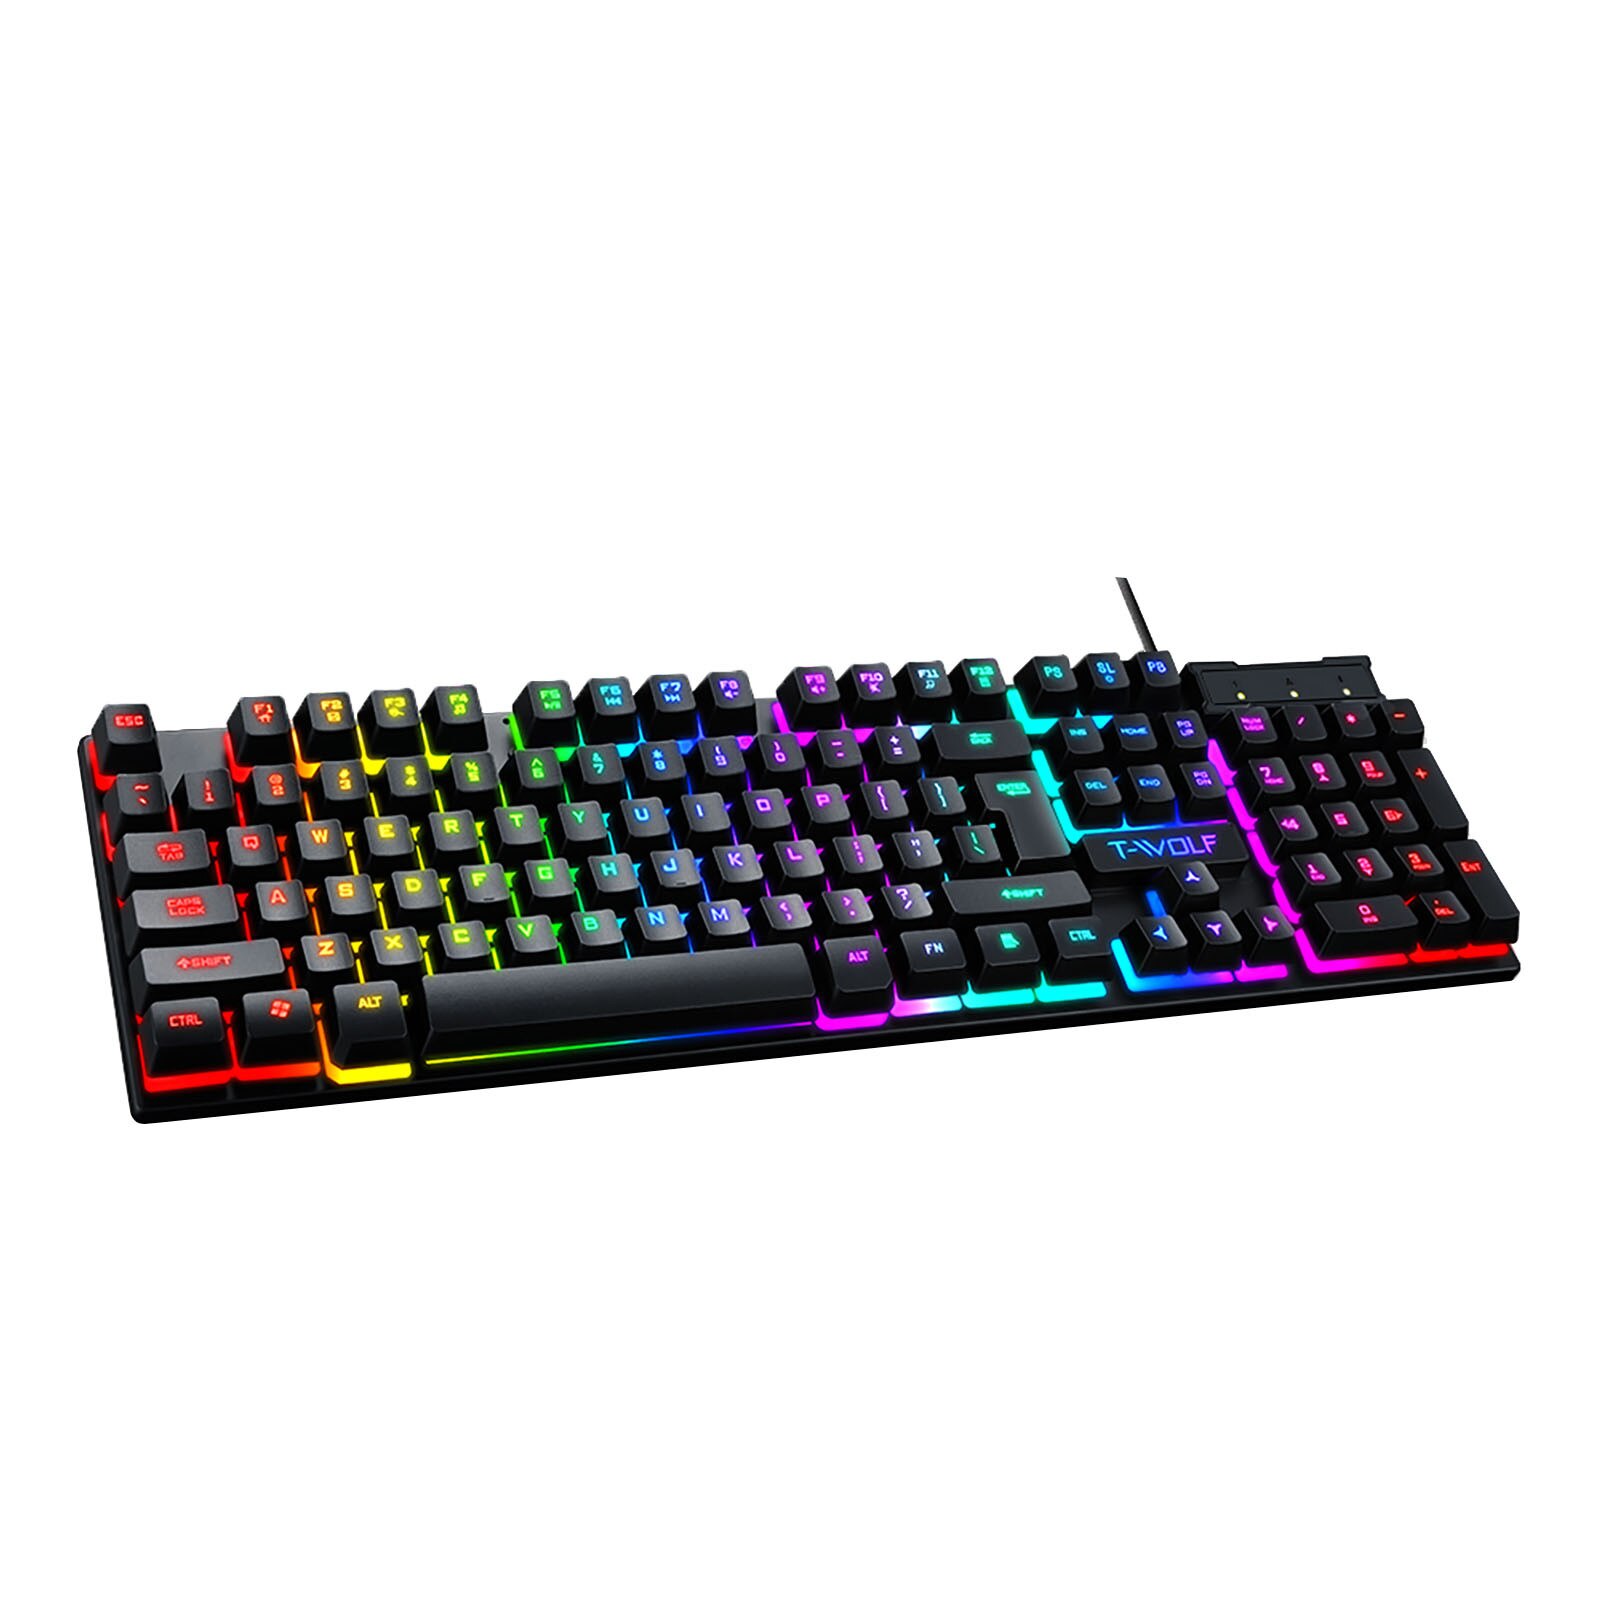 Mechanical gaming keyboard TF200 Rainbow Backlight Usb ergonomic gaming keyboard, suitable for PC laptop gaming